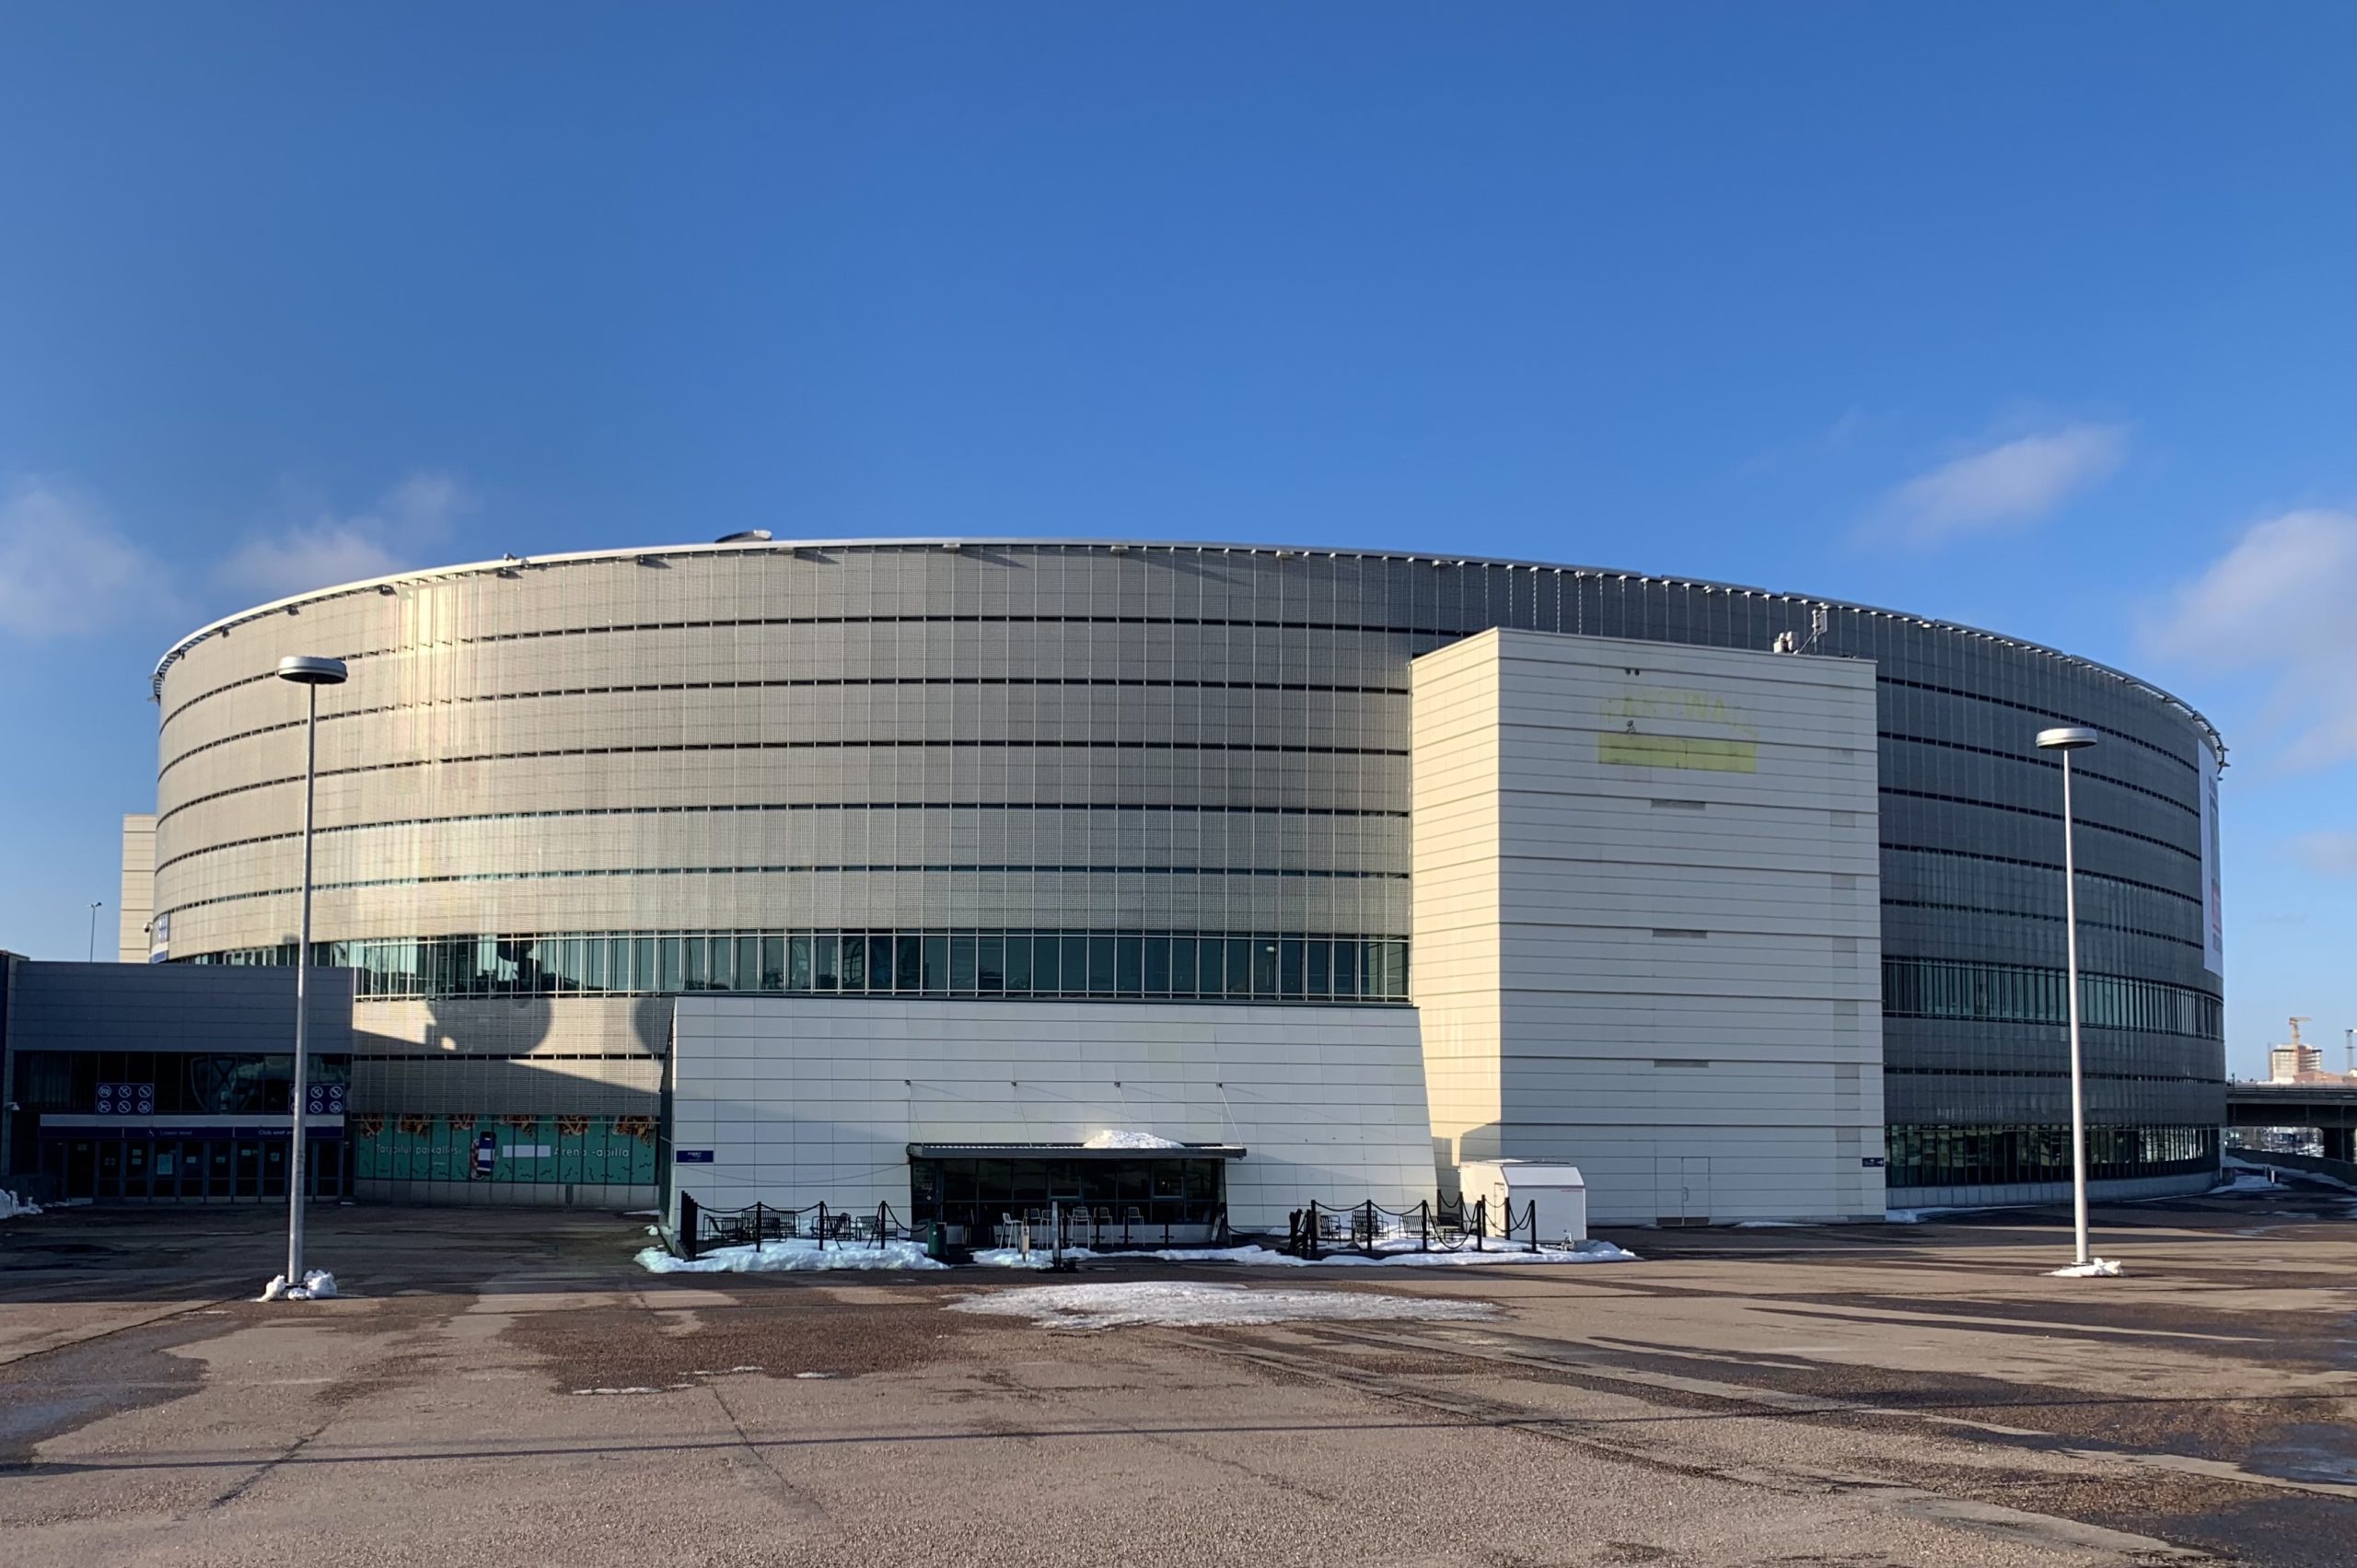 Helsinki Arena